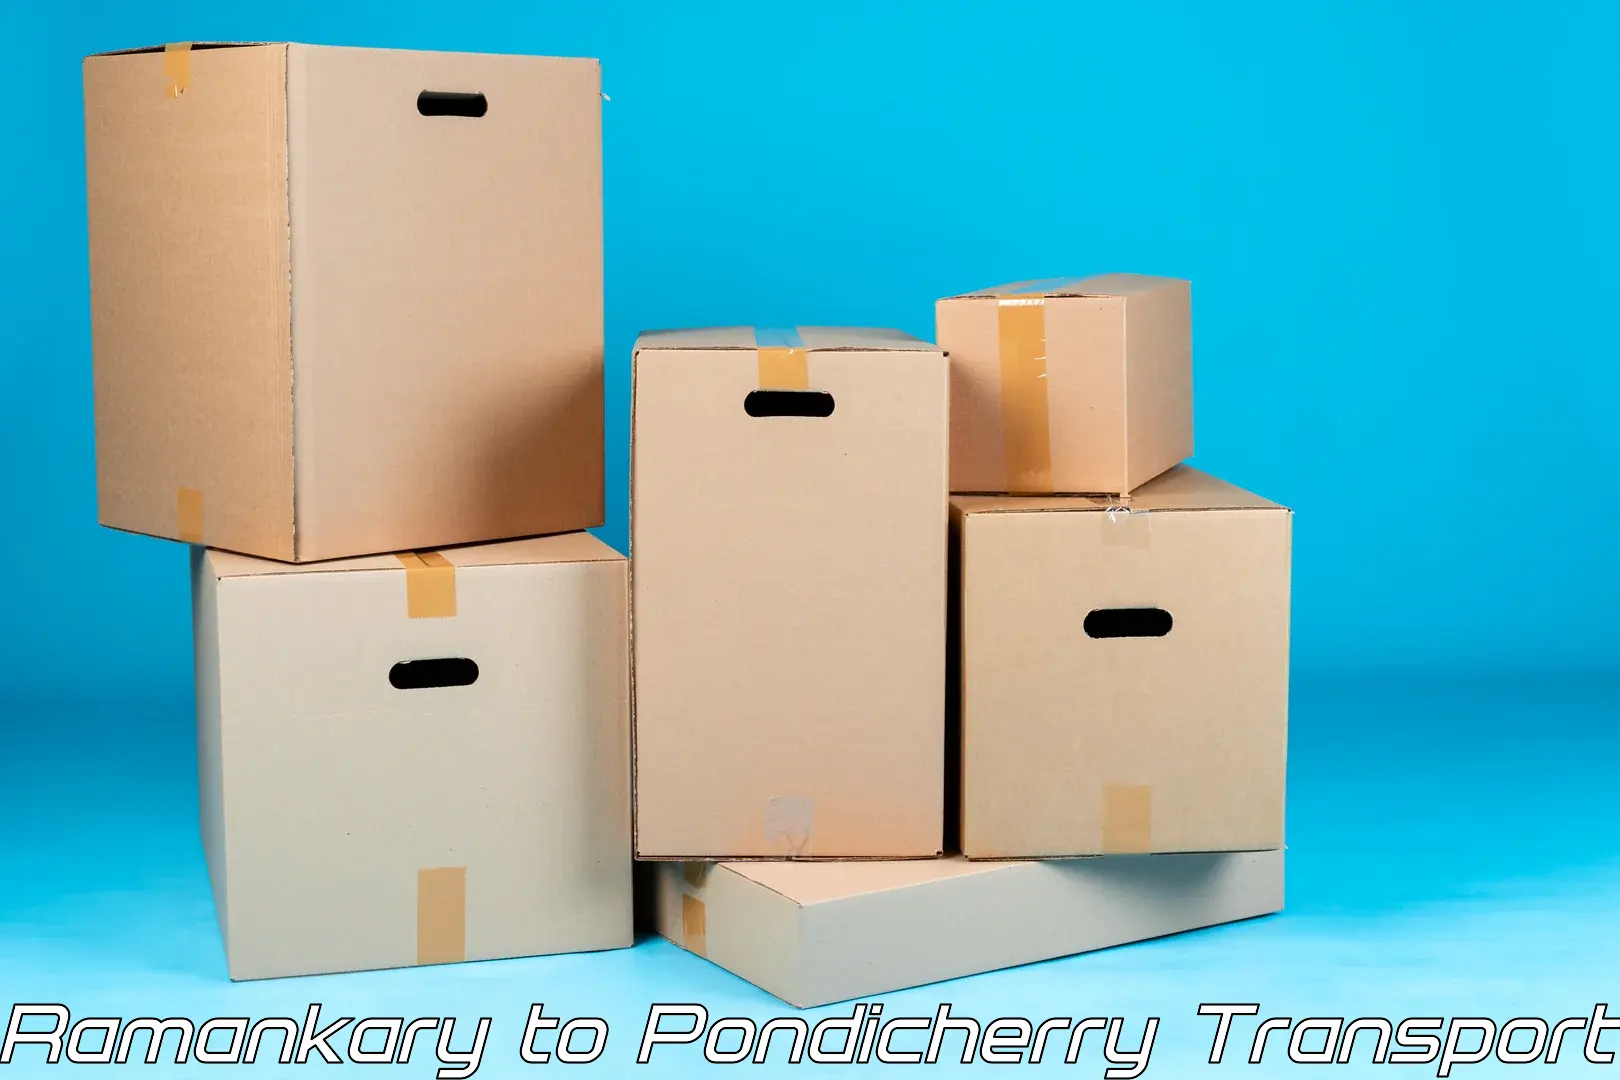 Container transport service Ramankary to Pondicherry University